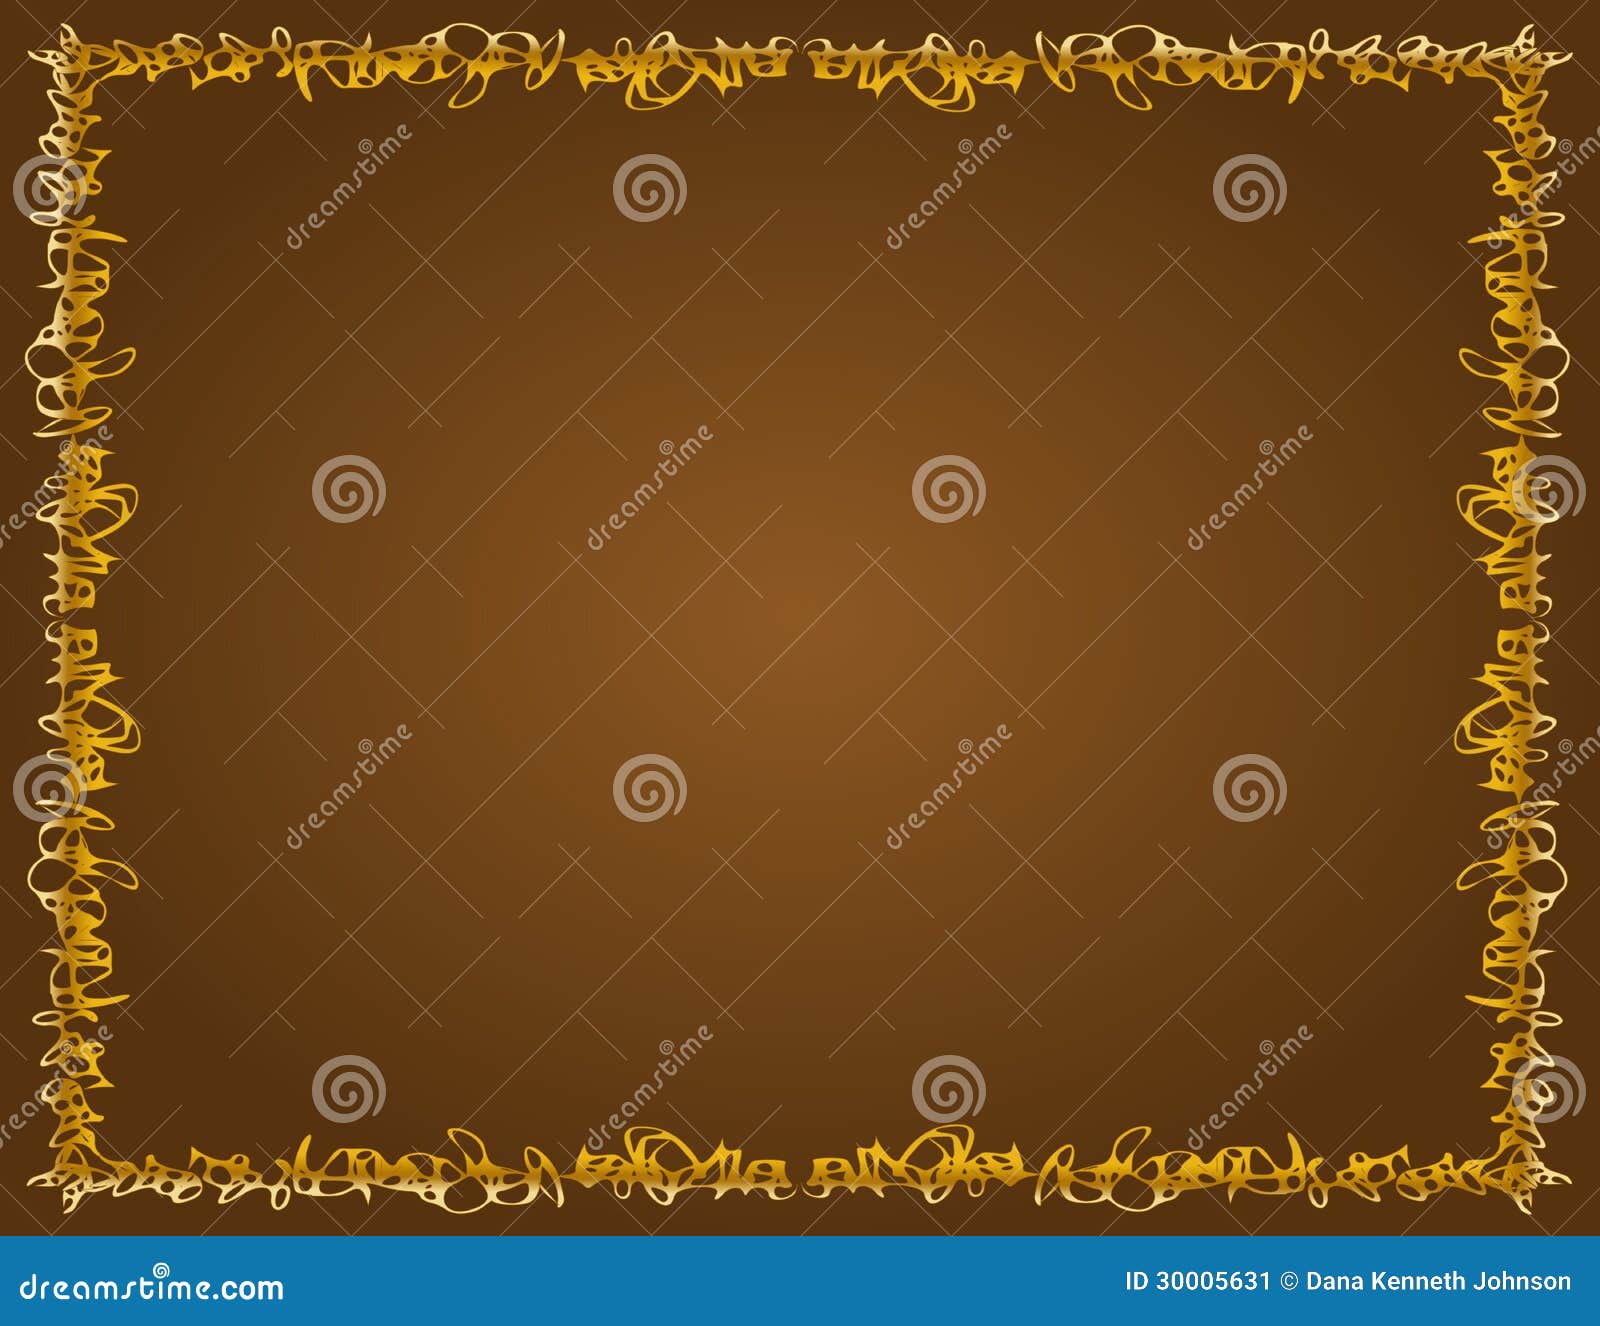 whimsical golden border, brown background